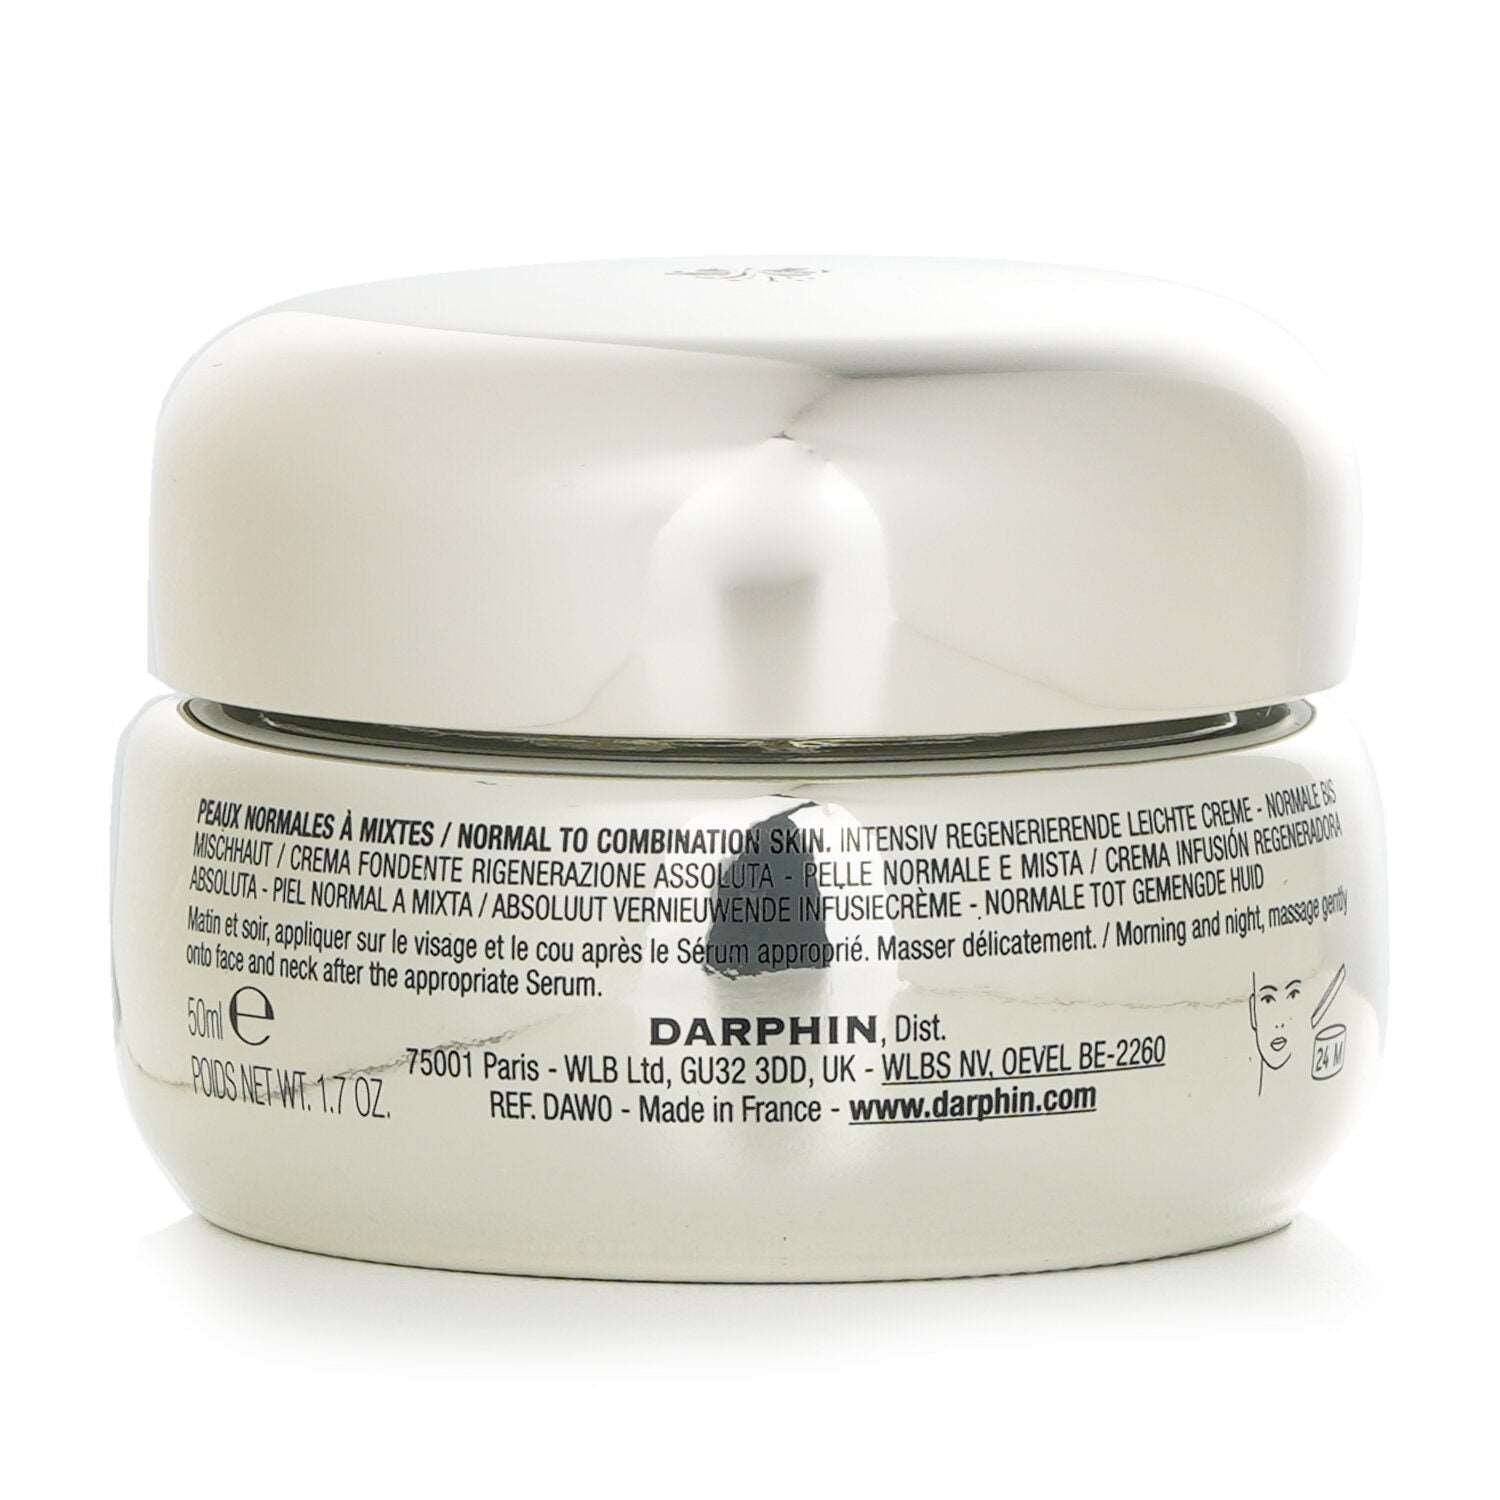 DARPHIN - Stimulskin Plus Absolute Renewal Infusion Cream - Normal to Combination Skin - 50ml/1.7oz 3P's Inclusive Beauty